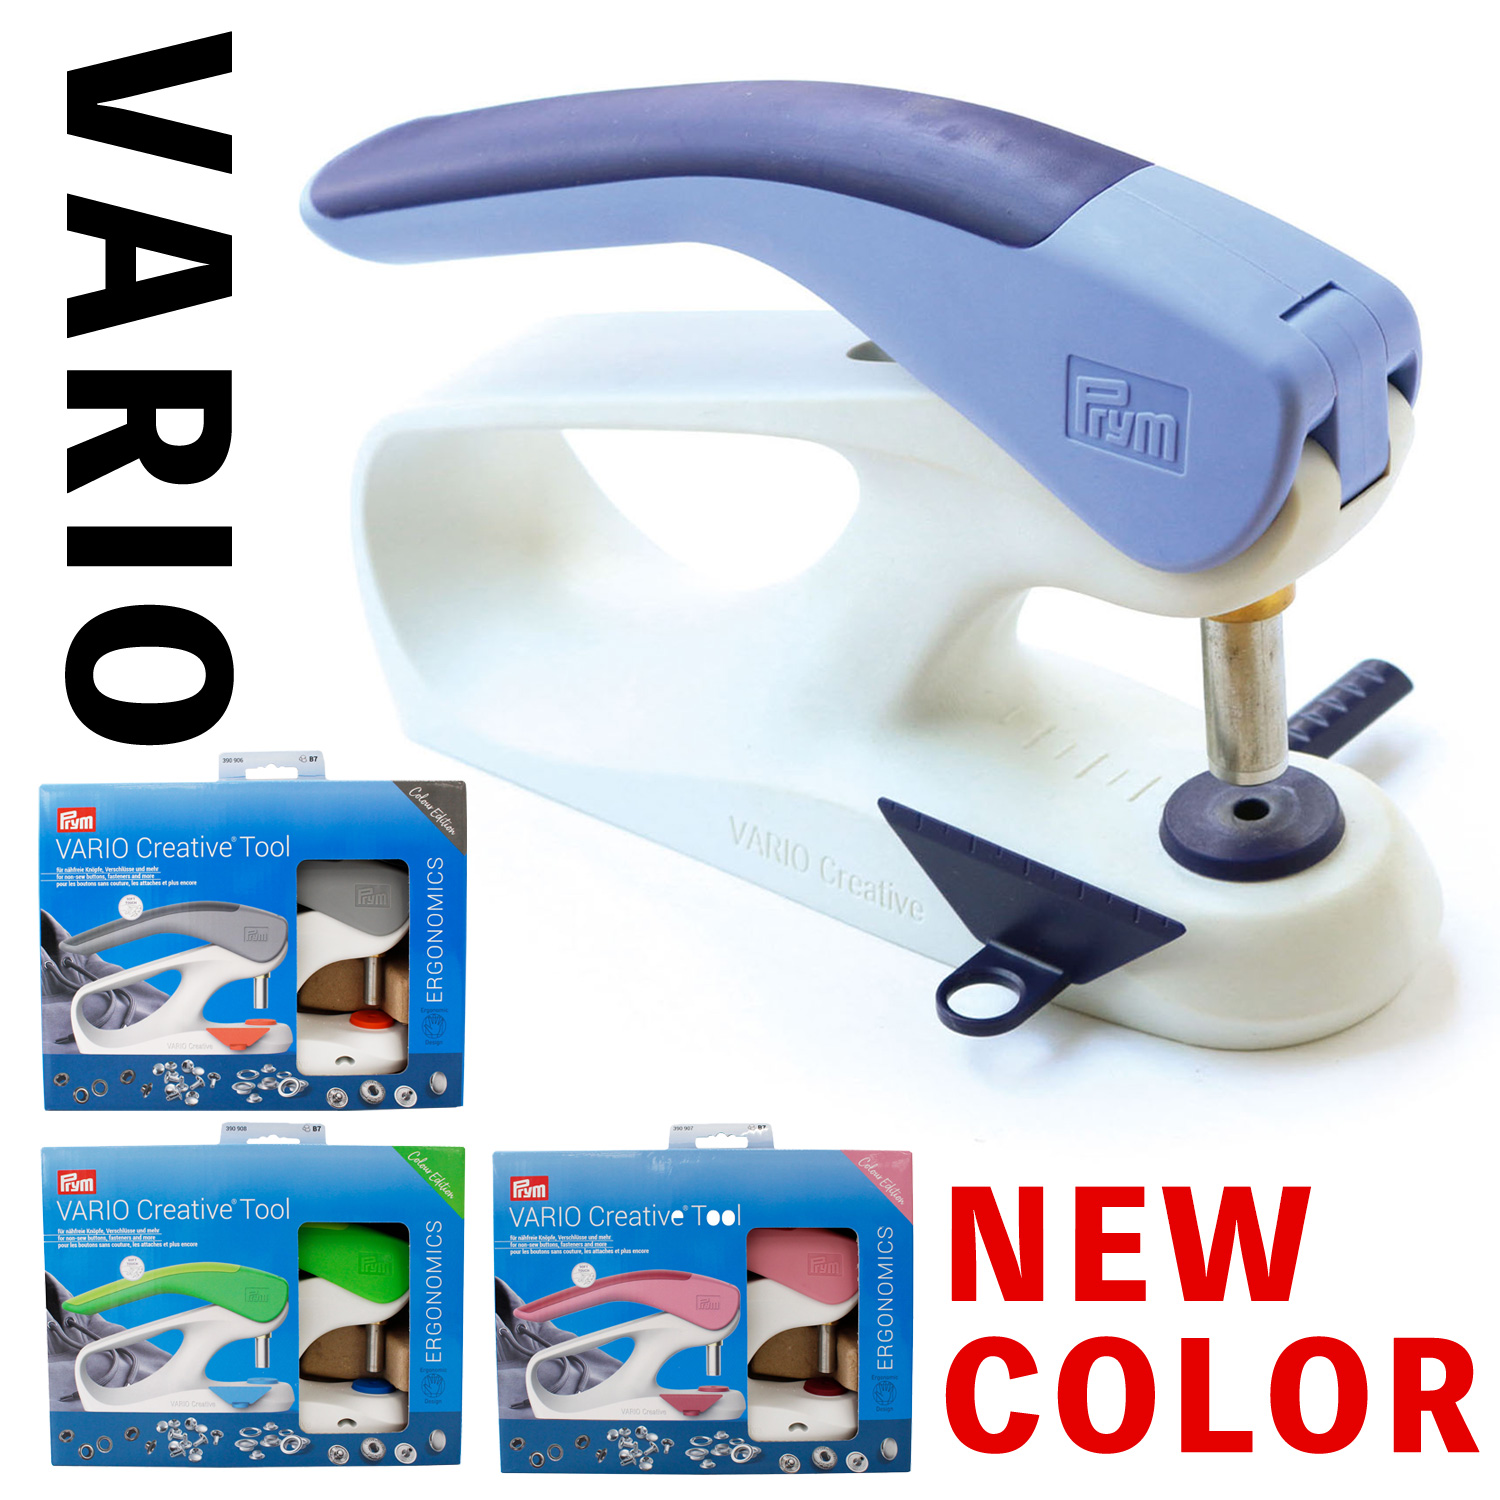 PRM Prym VARIO Creative Tool Hand press for home use (unit)